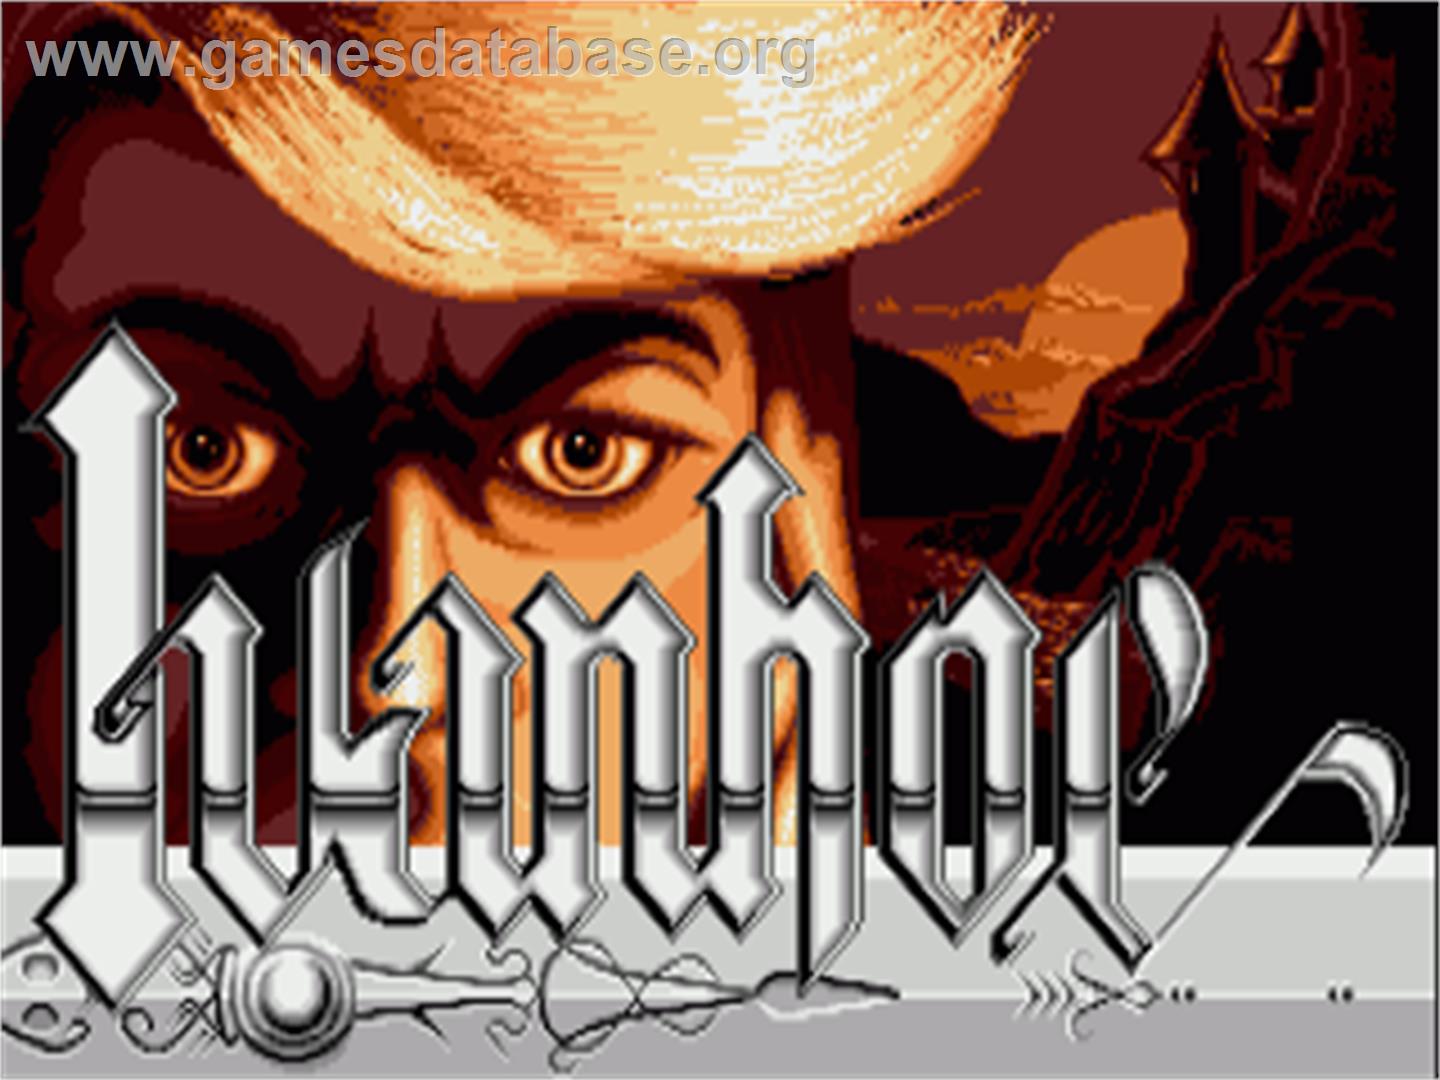 Ivanhoe - Commodore Amiga - Artwork - Title Screen